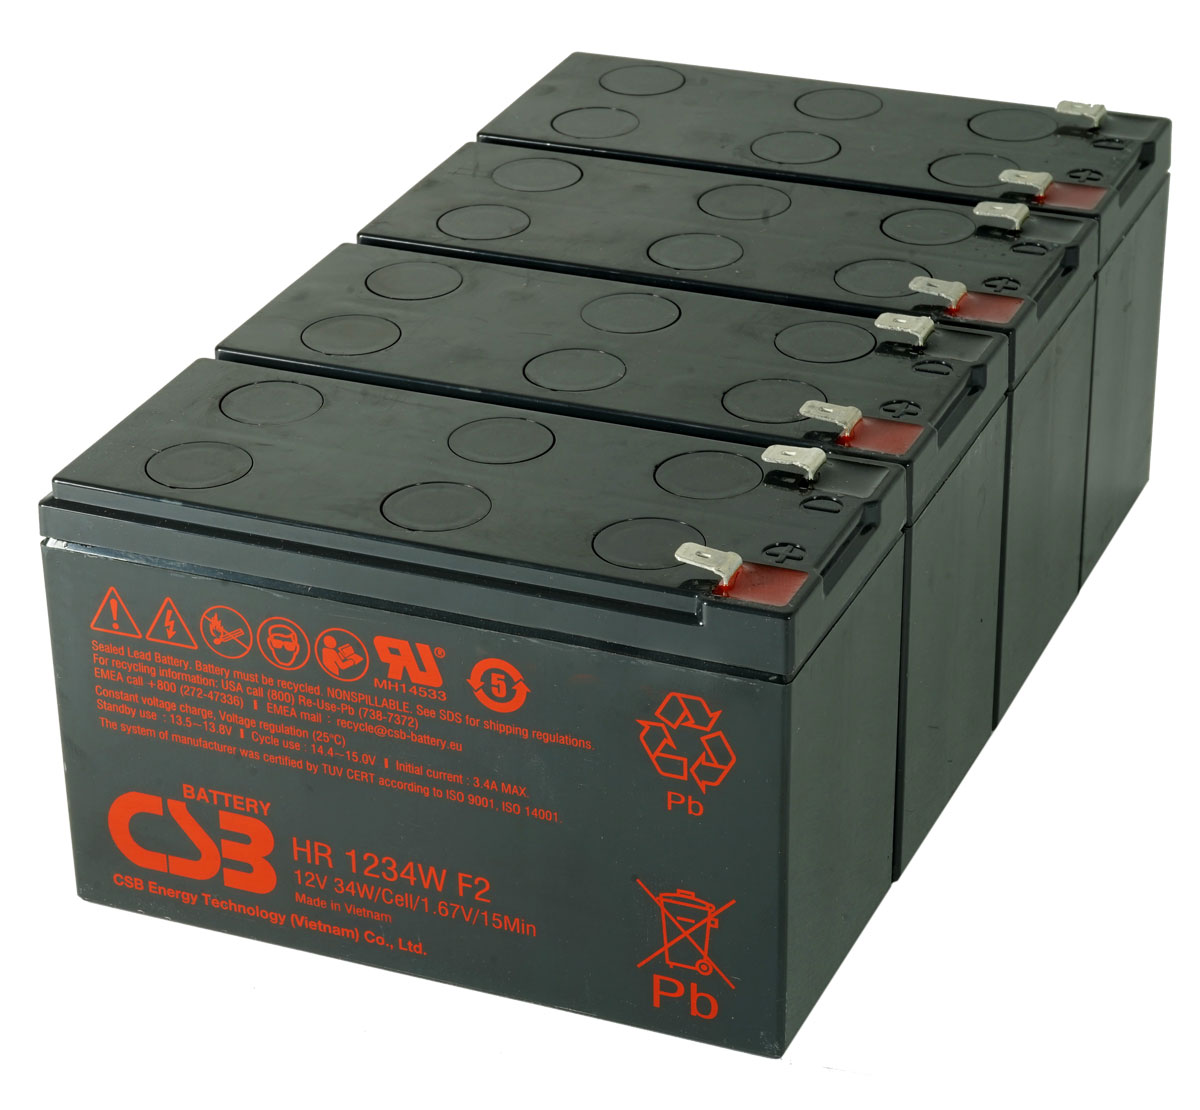 MDS155 UPS Battery Kit - Replaces APC RBC155